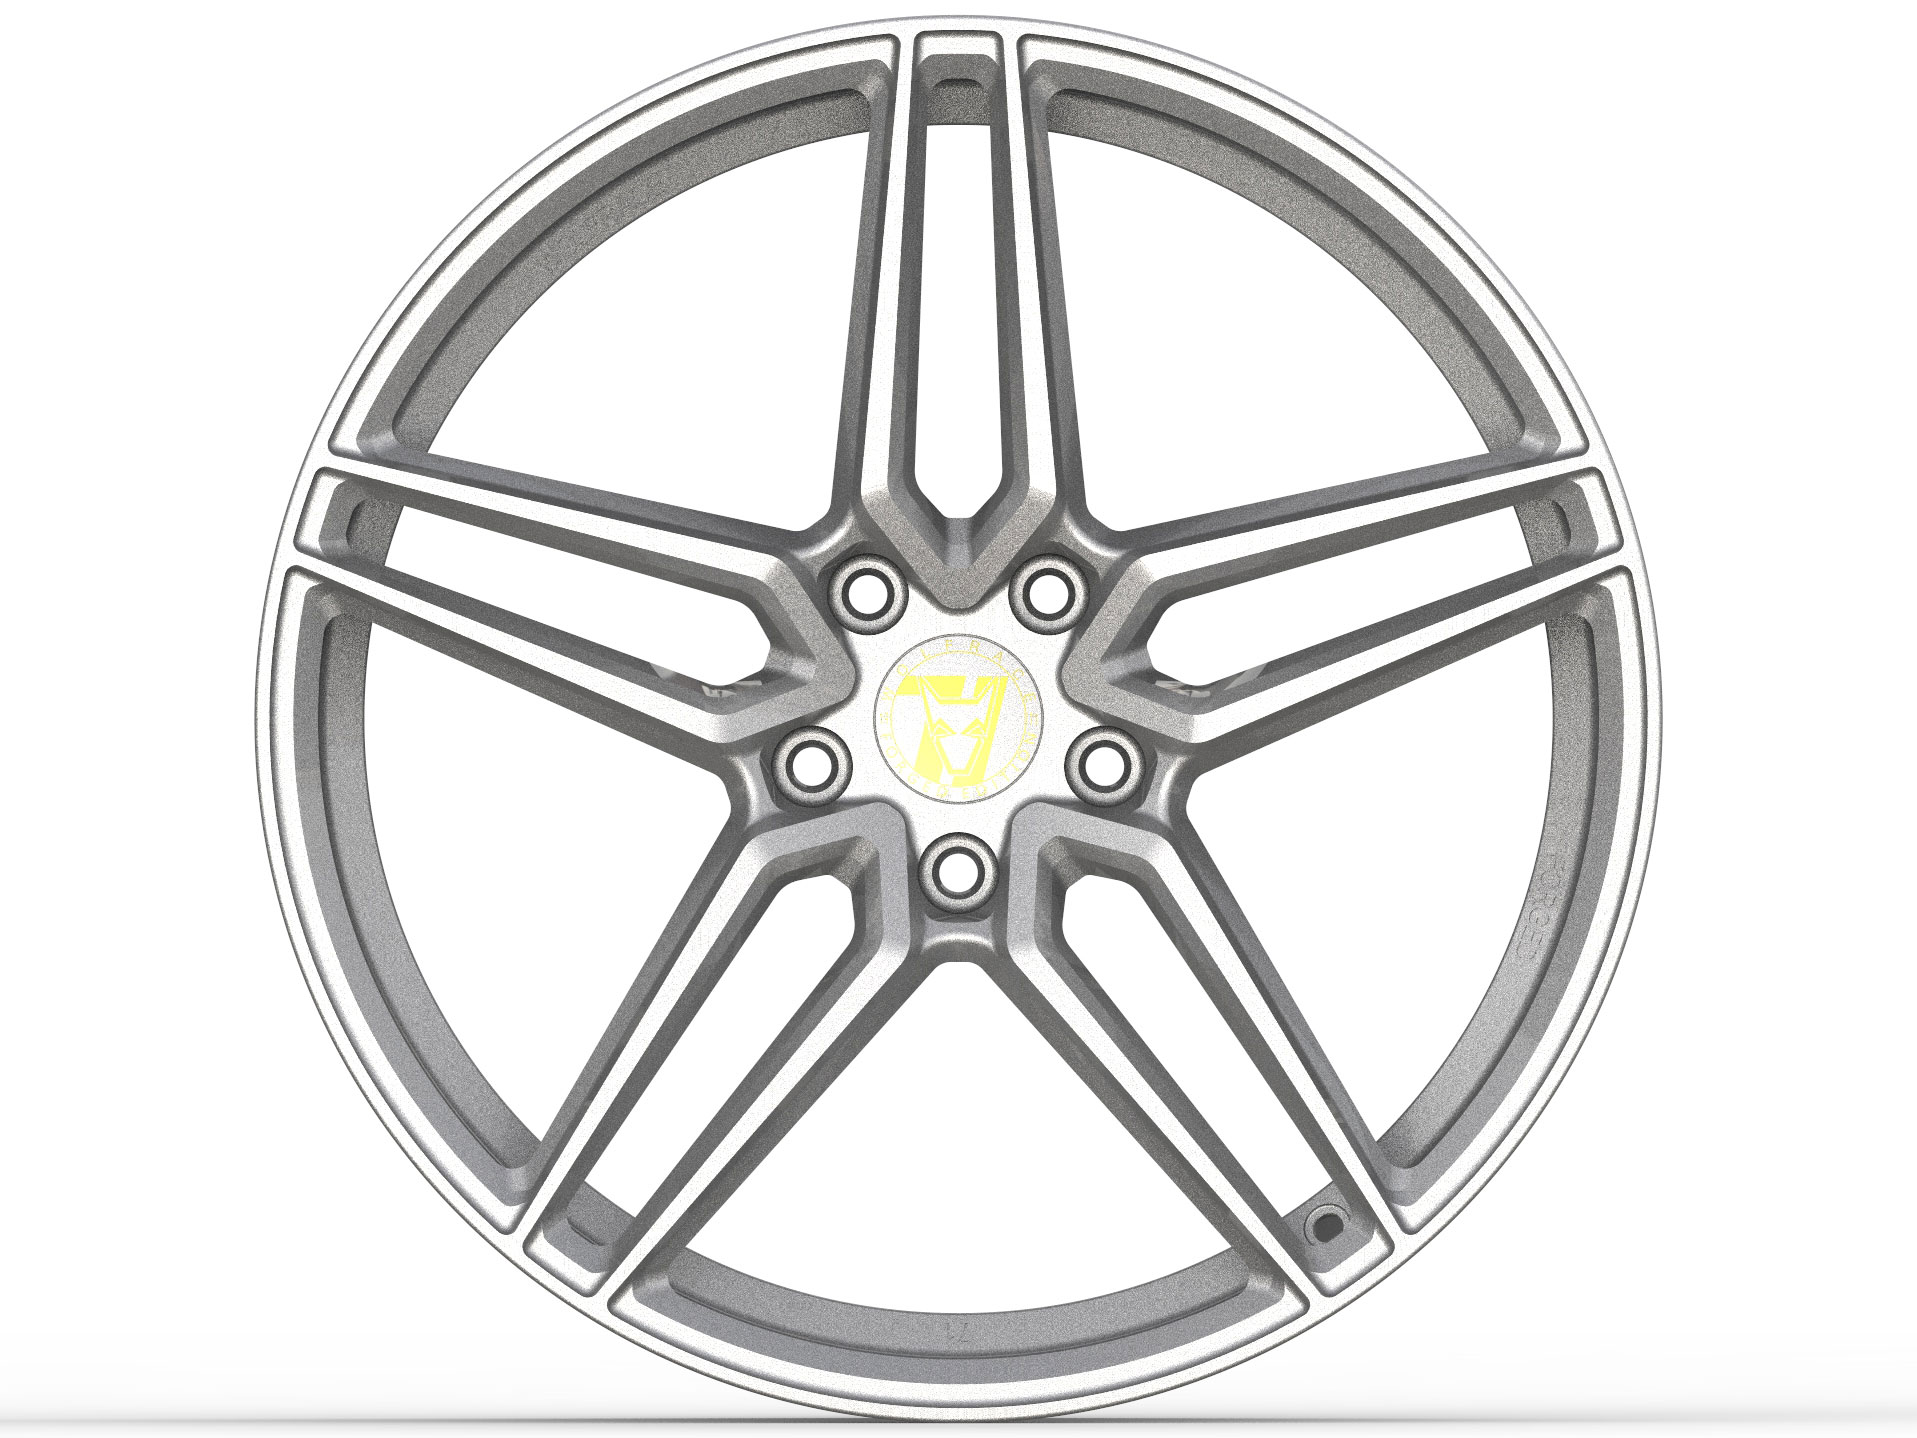 Wolfrace-71-Forged-Edition-Talon-Urban-Chrome-Polished-Alloy-Wheels